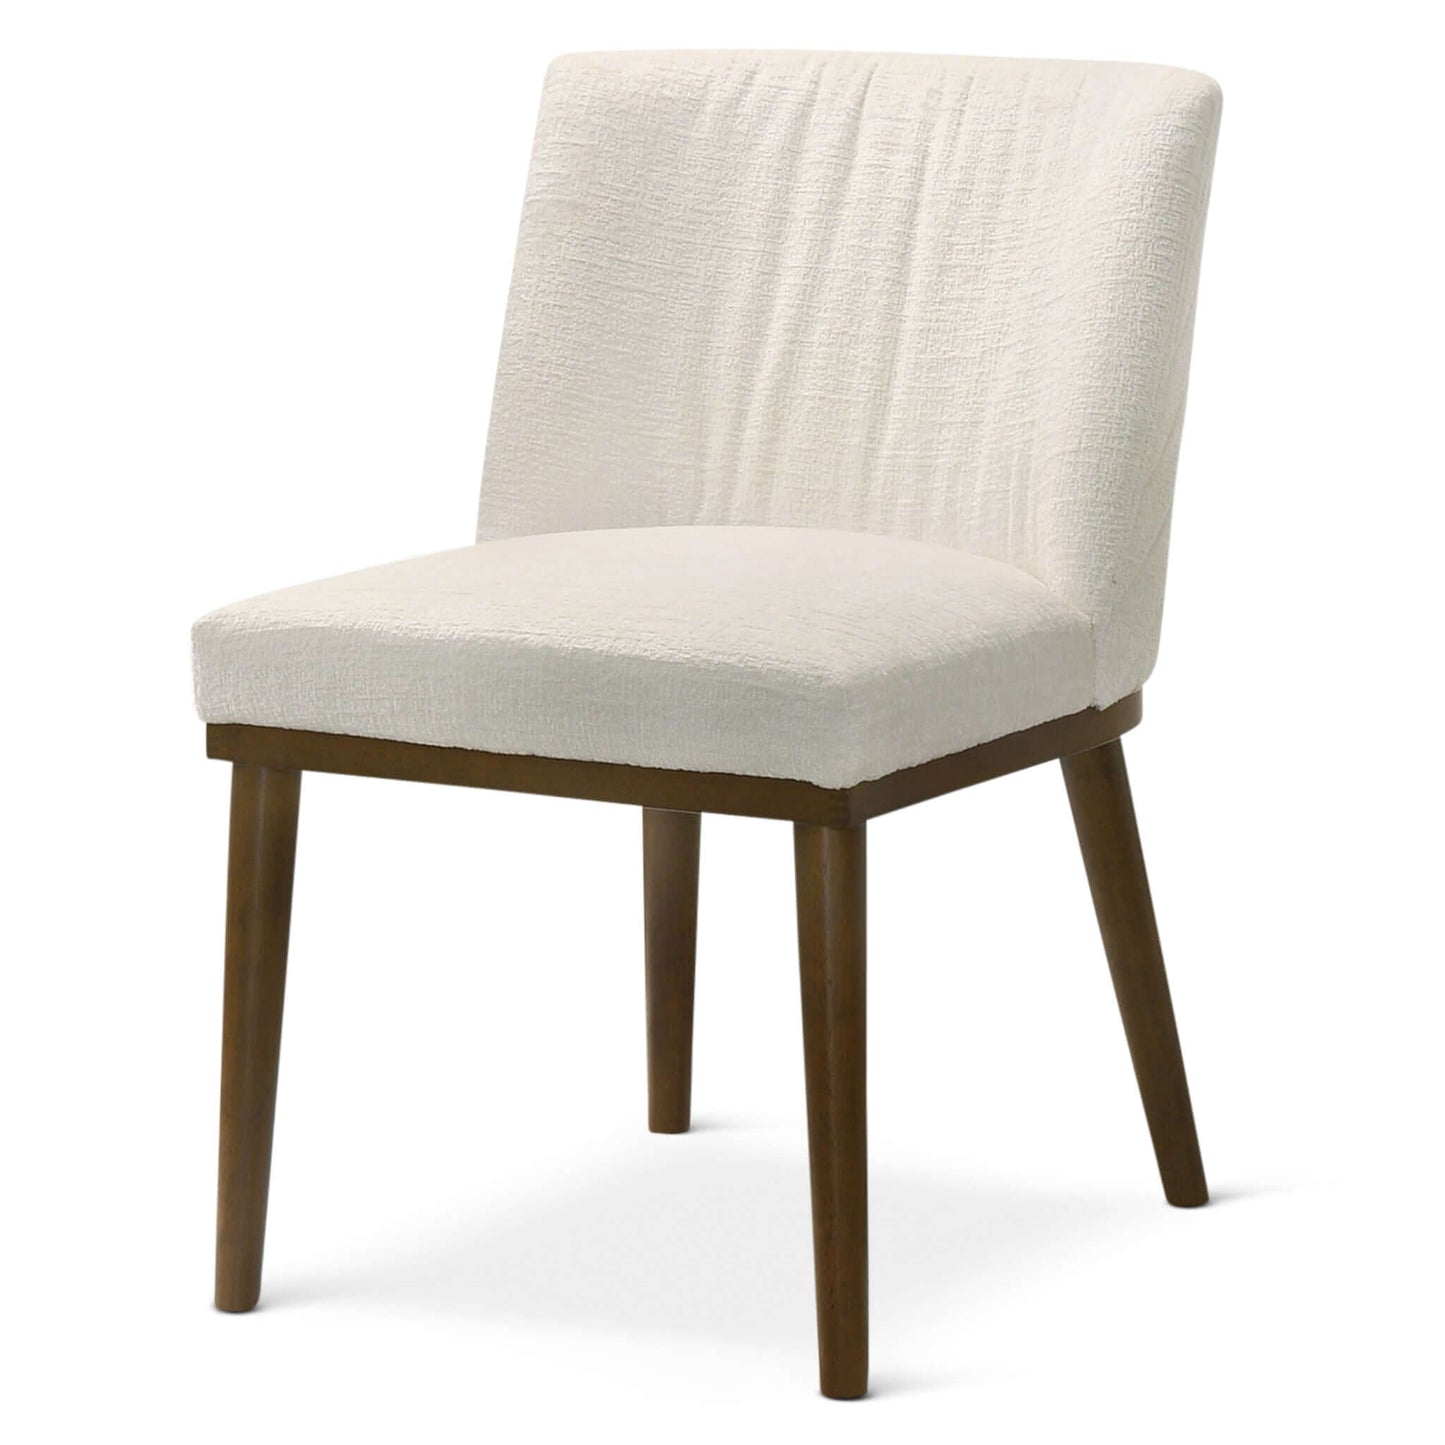 ashcroftfurniture.com Dublın Mid-Century Modern Upholstered White Fabric Dining Chair (Set of 2)